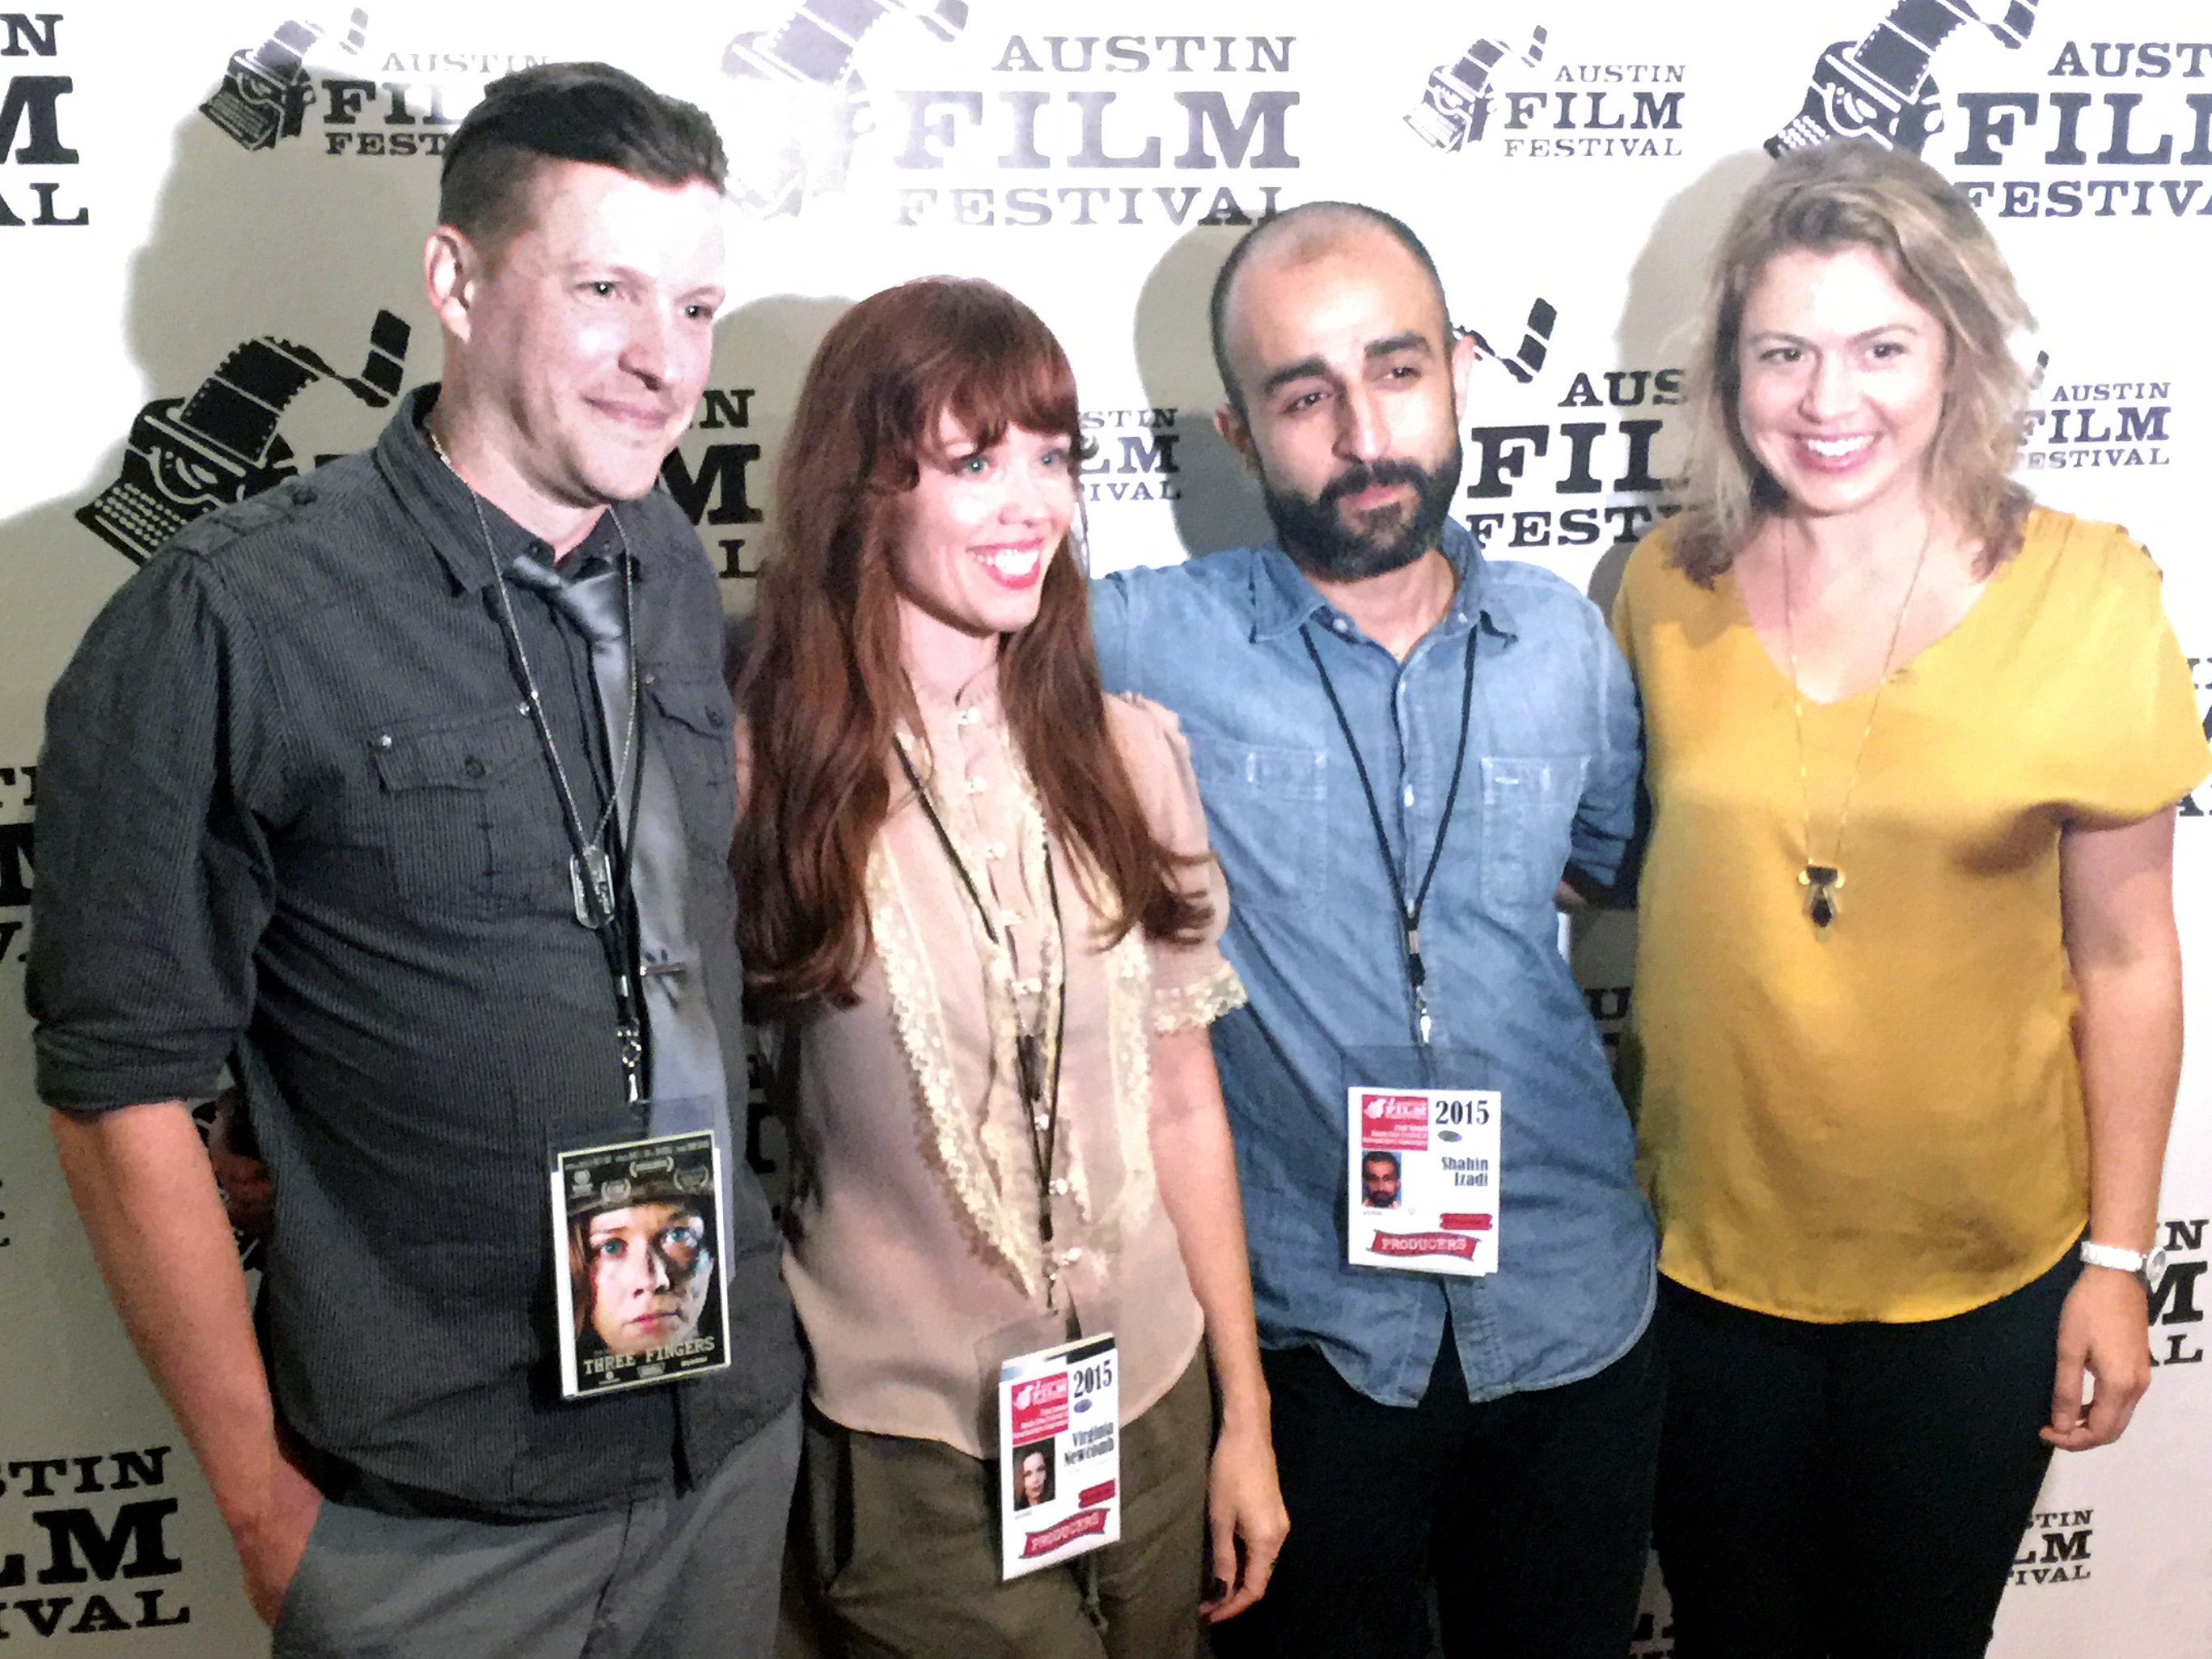 Paul D. Hart, Virginia Newcomb, Shahin Izadi & Megan Brotherton on the Austin Film Festival red carpet